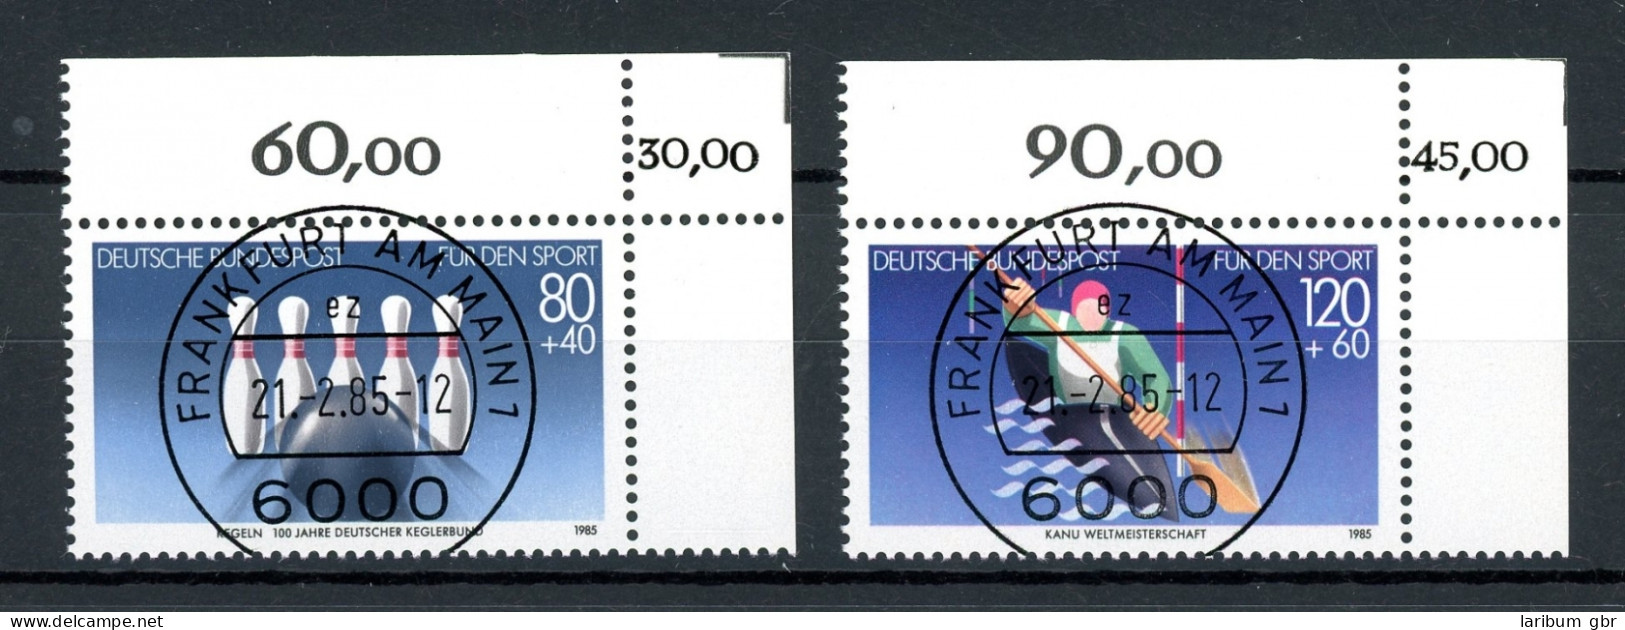 Bund 1238-1239 KBWZ Gestempelt Frankfurt #IV044 - Used Stamps